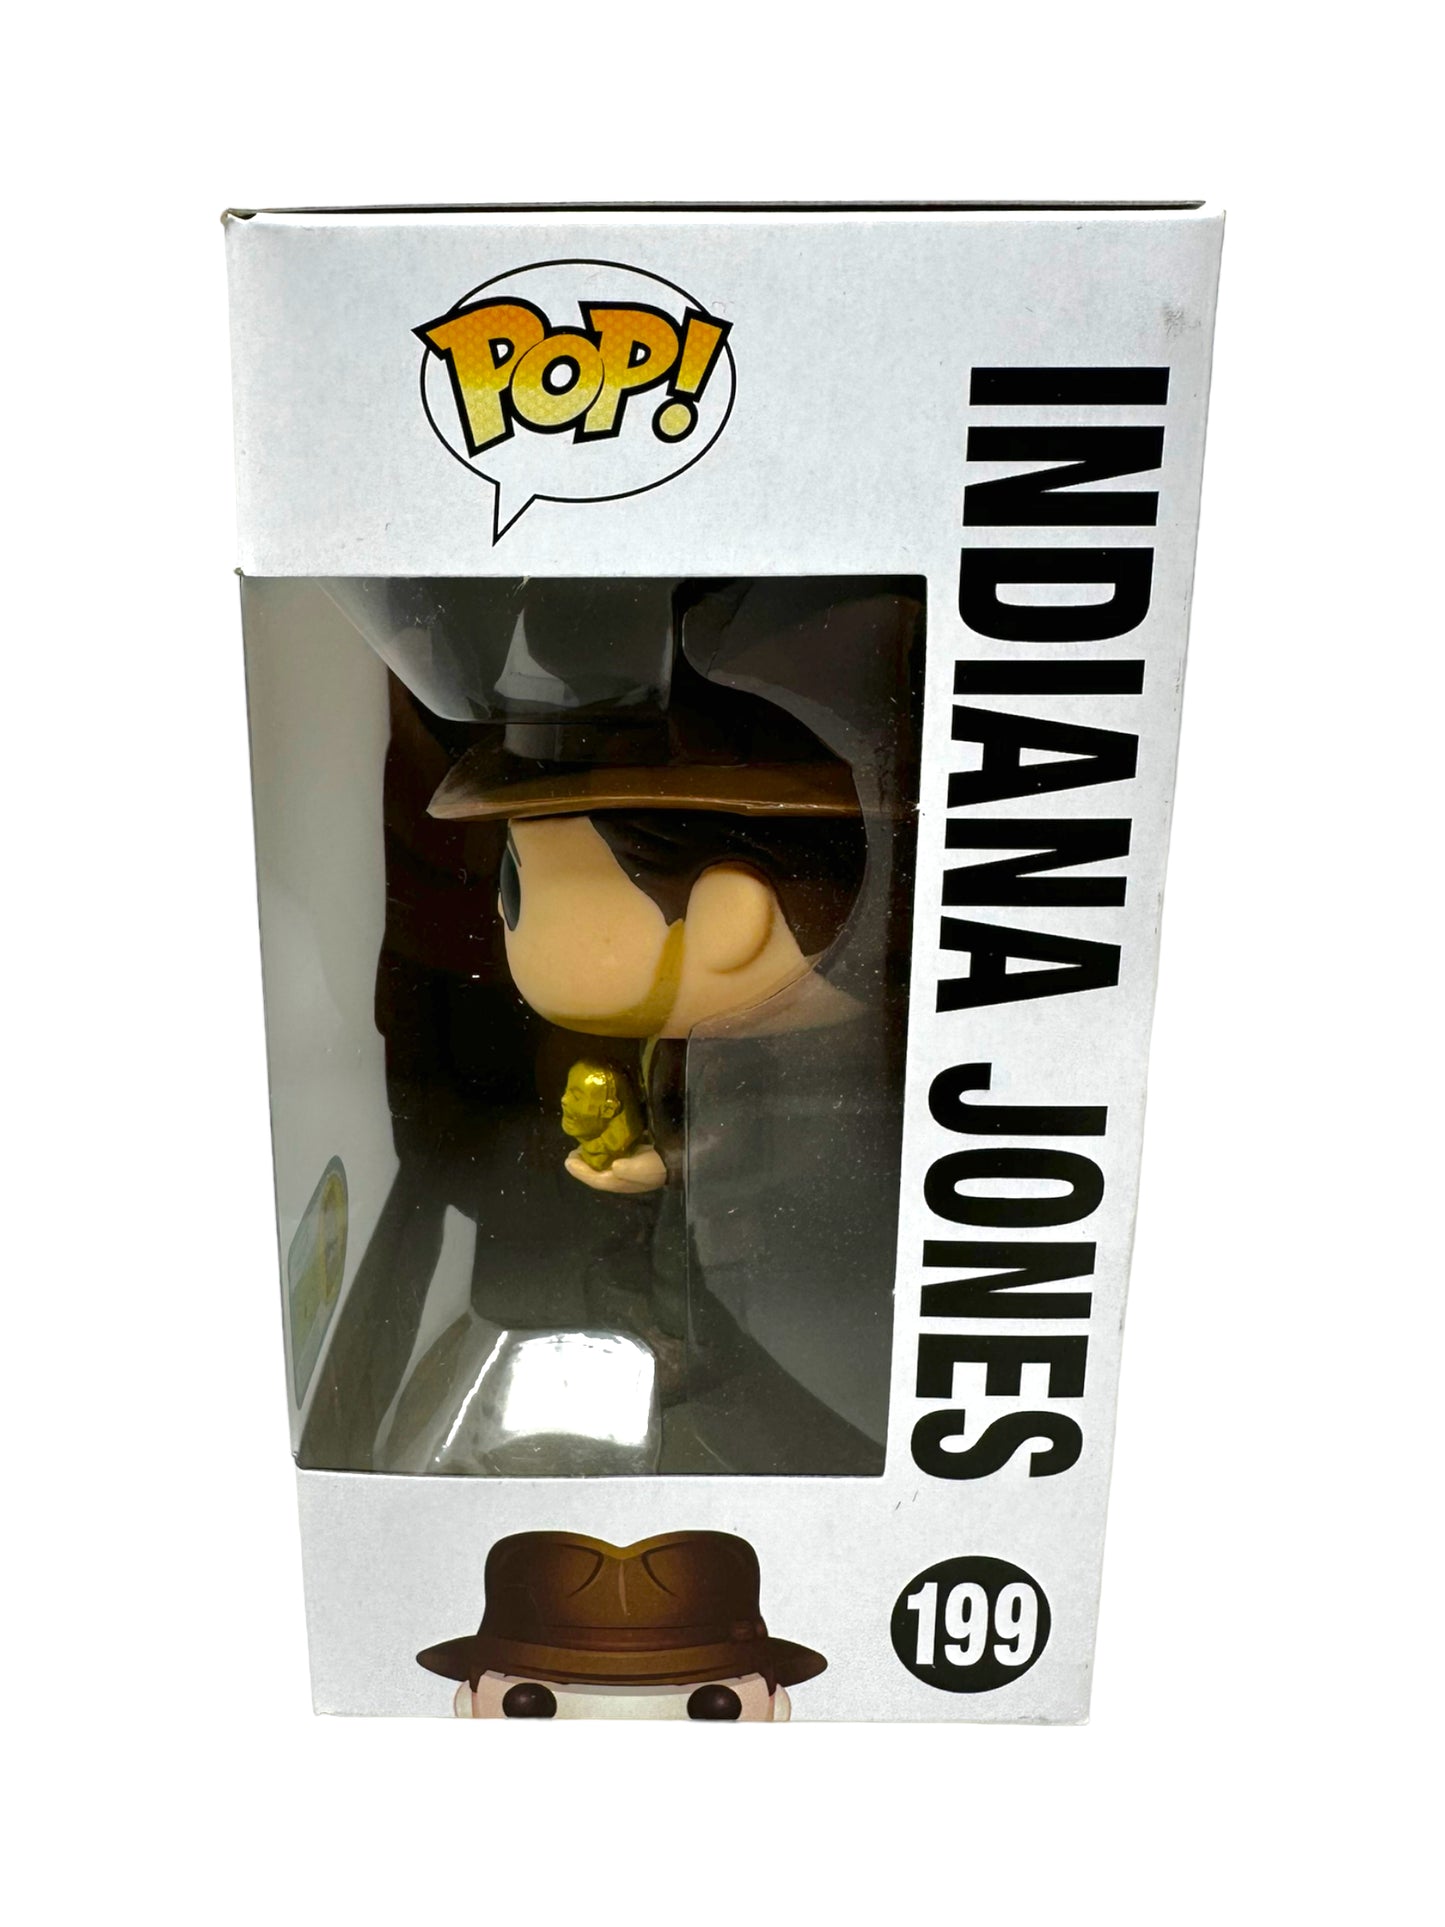 Sold 9/16 2016 SDCC Indiana Jones 199